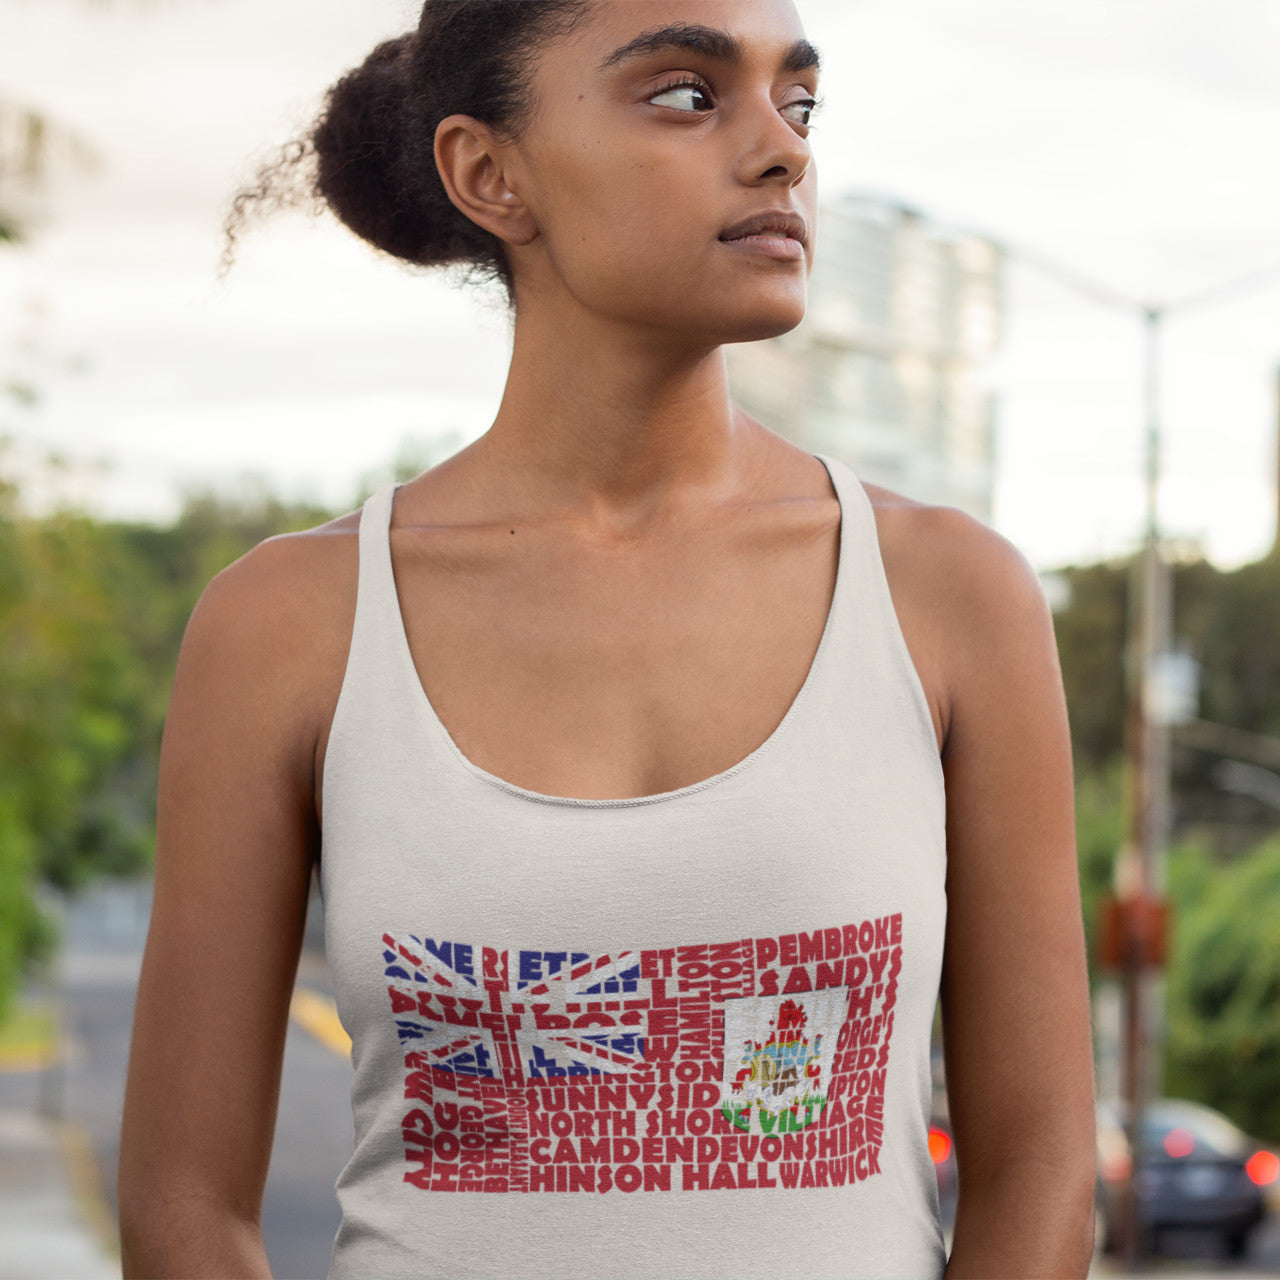 Bermuda Flag Stencil - Women's Tank Top